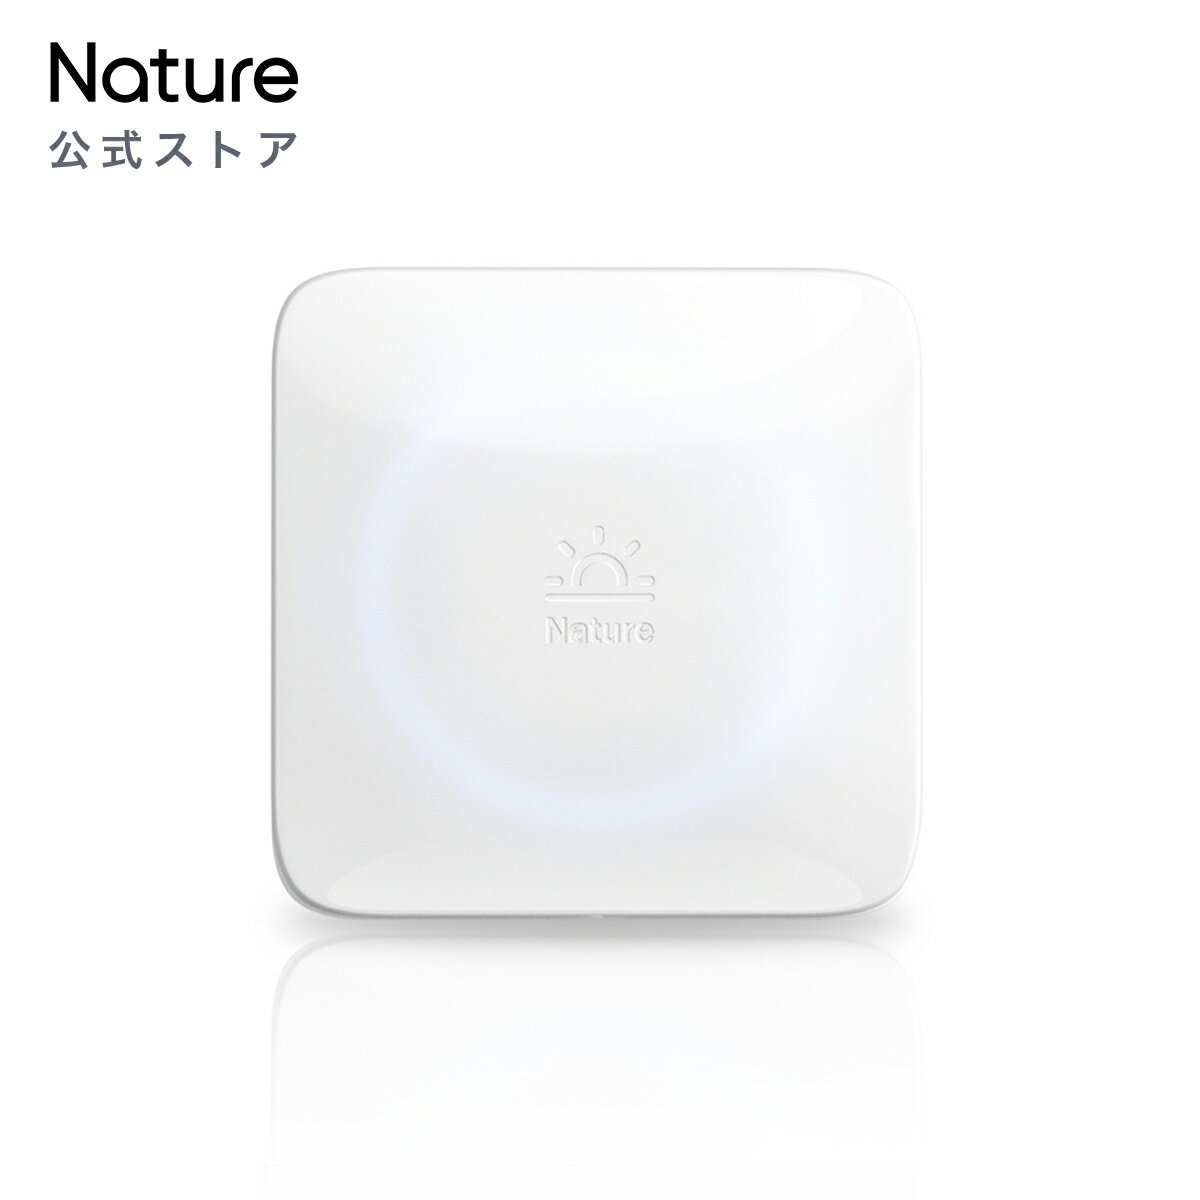 Nature X}[gR Nature Remo ƓdRg[ Amazon Alexa Google Home Siri Ή GPSAg x x Ɠx lZT[ Remo-1W2